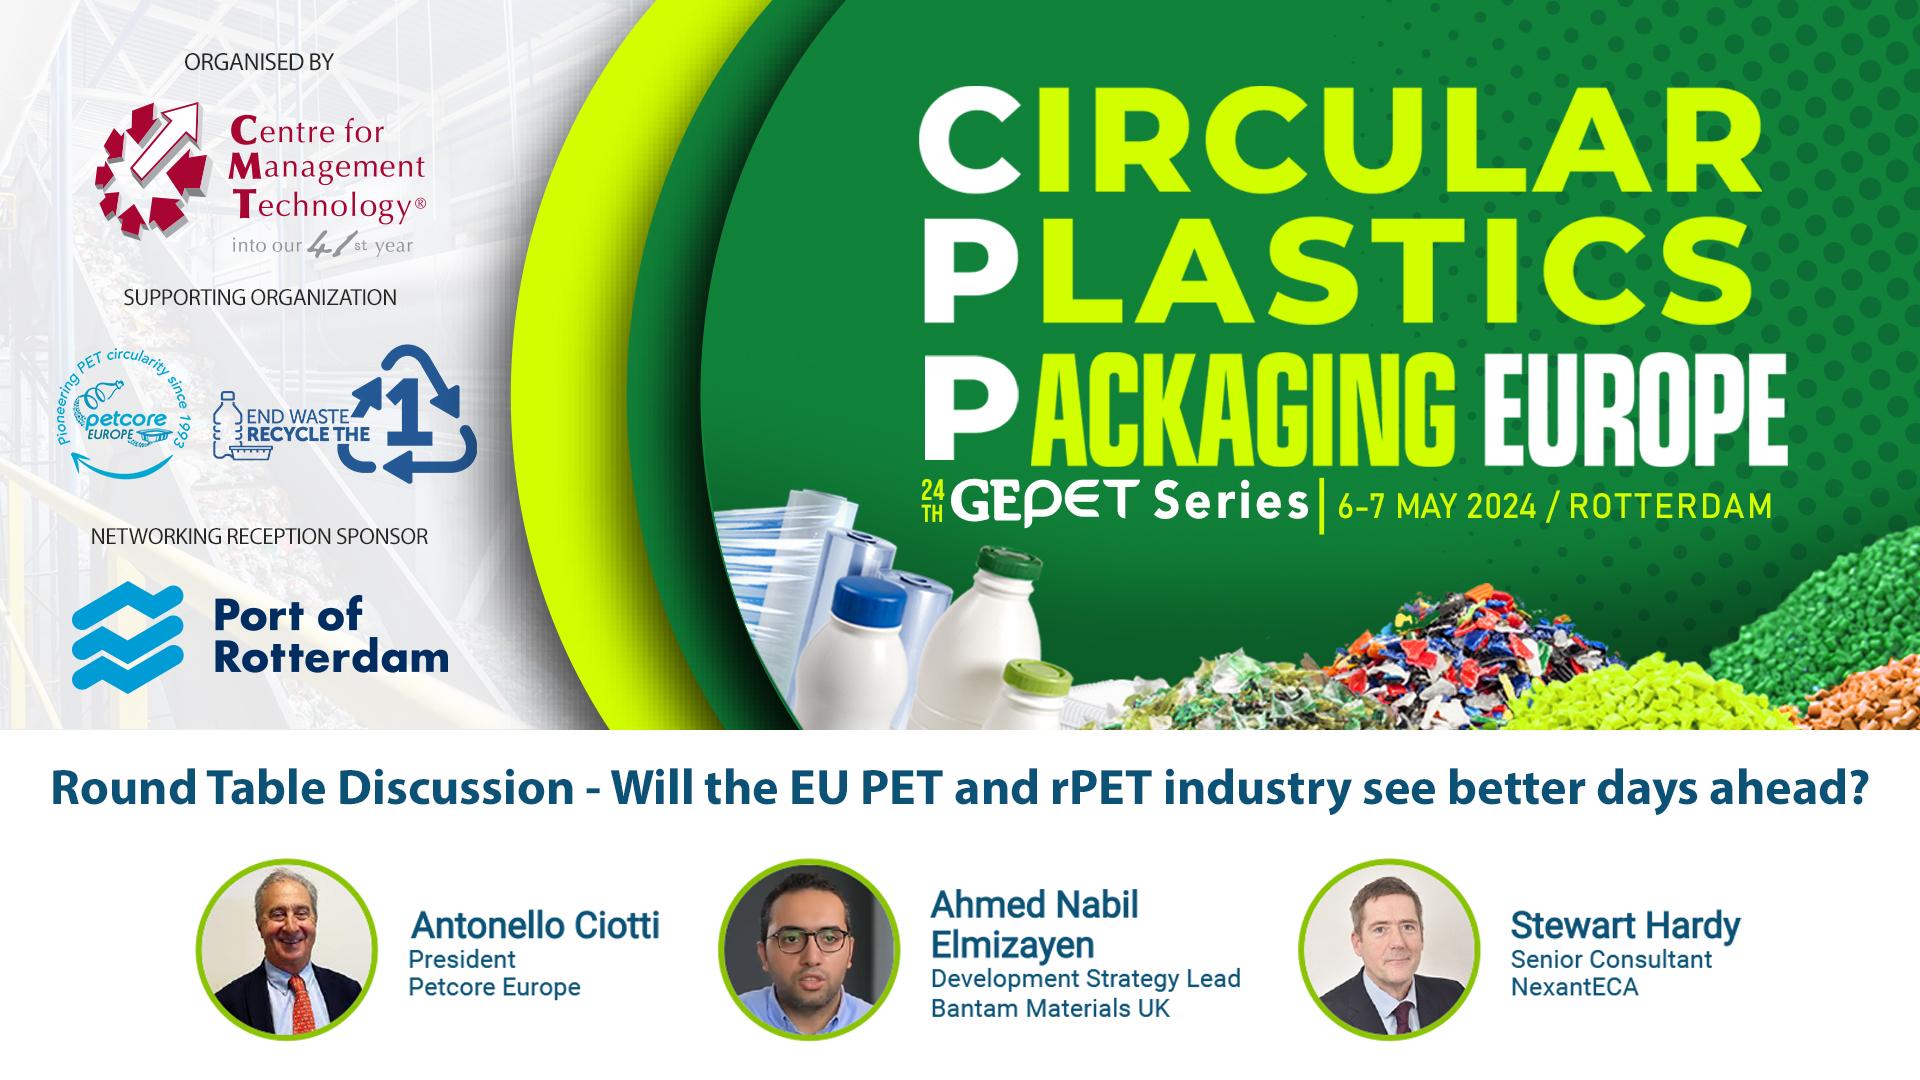 Circular Plastics Packaging Europe - 24th GEPET Series